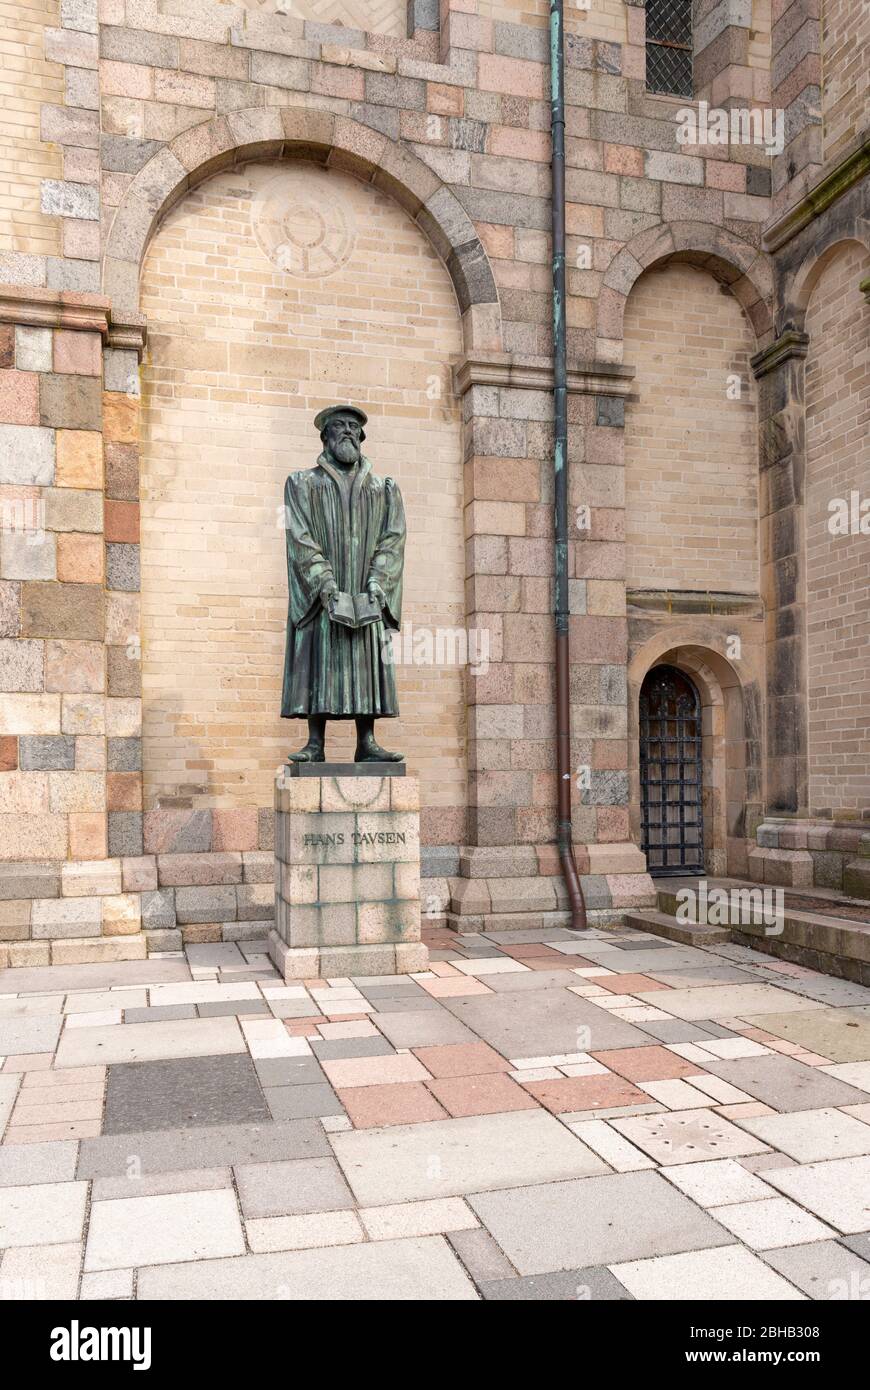 Denmark, Jutland, Ribe (oldest city of Denmark), statue at the cathedral, Hans Tavsen (1494-1561) Danish theologian and evangelical reformer. Stock Photo